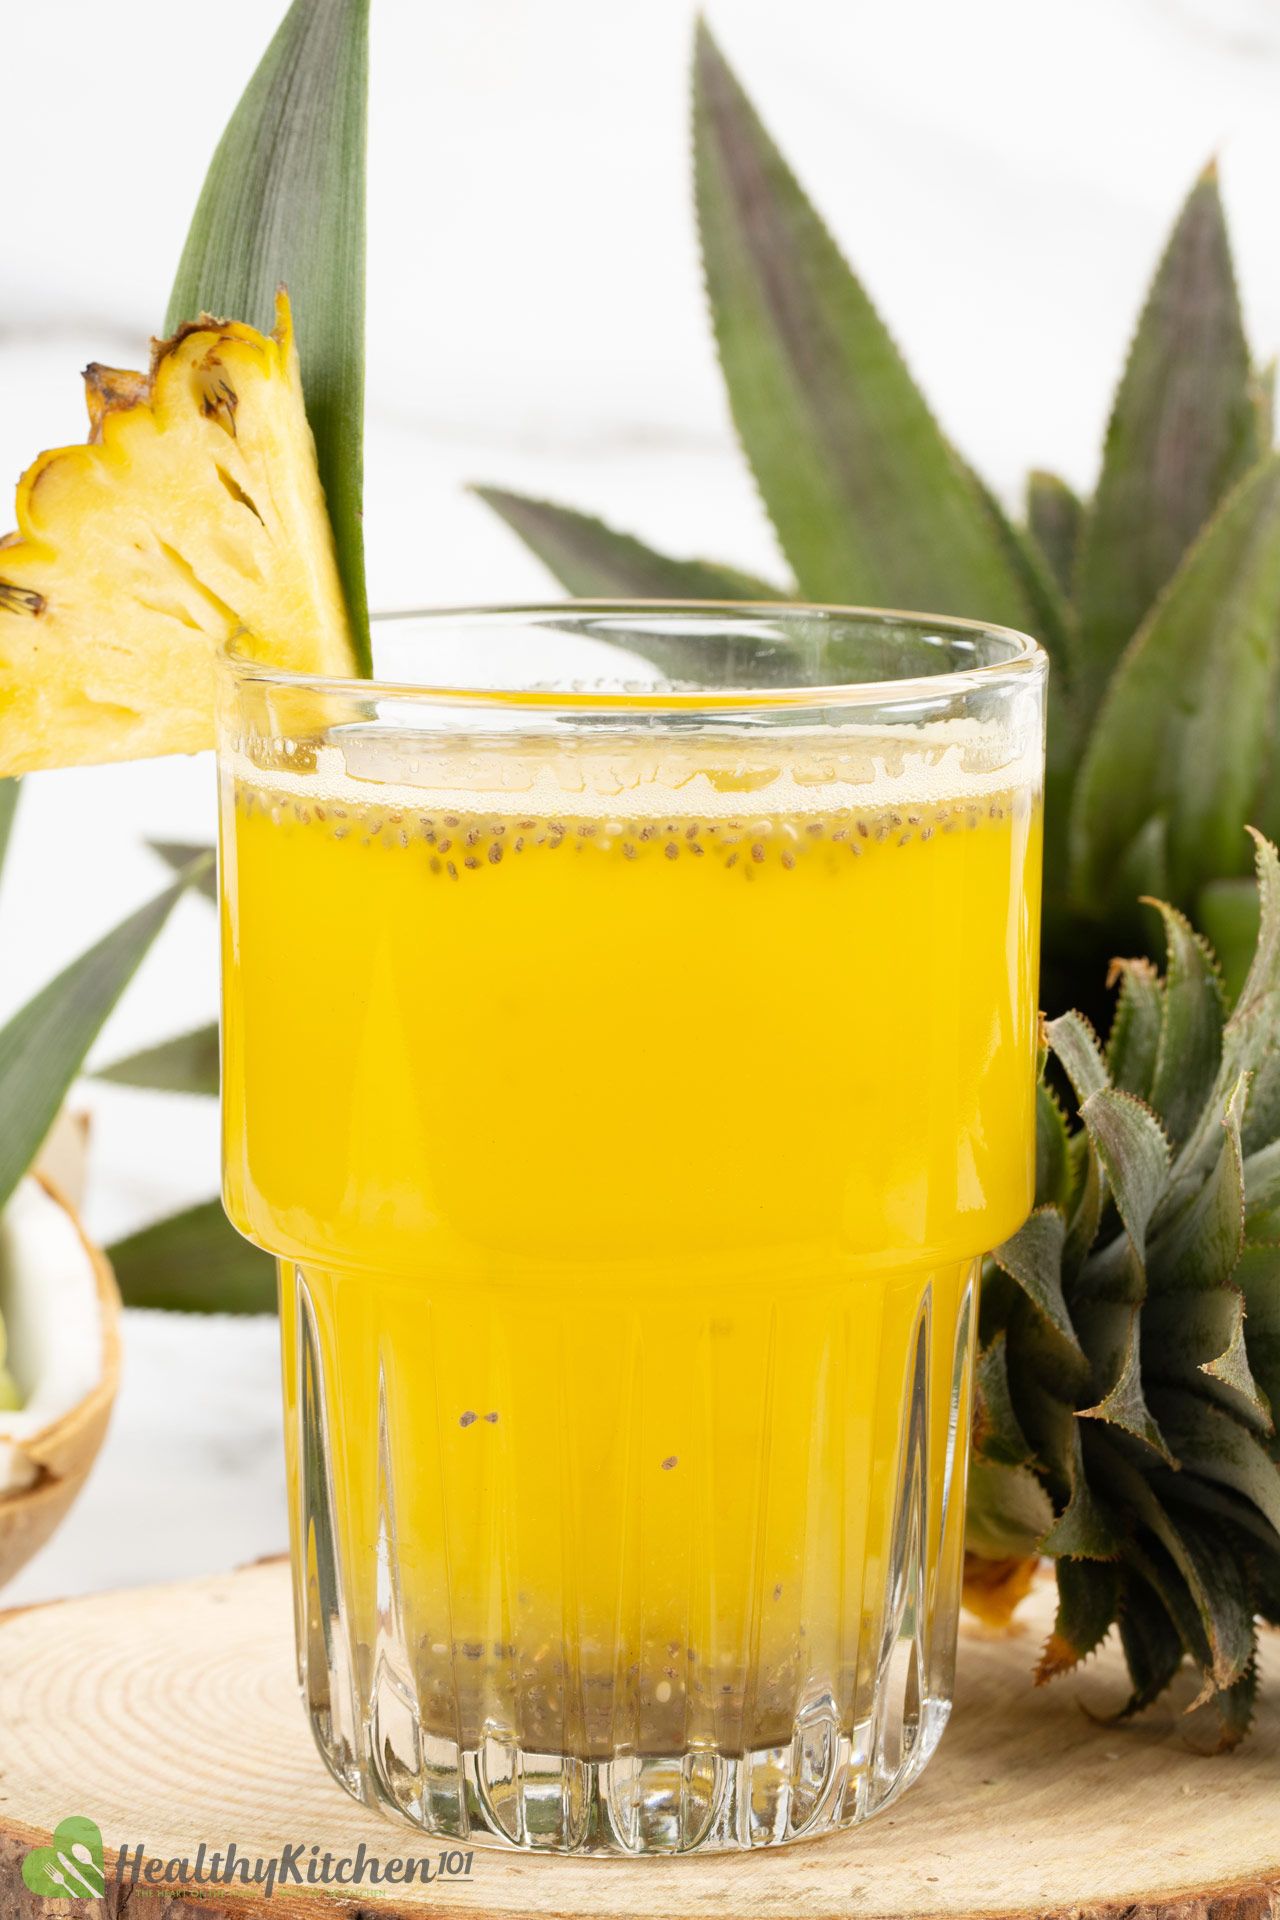 Homemade Sugar free Pineapple Juice Recipe